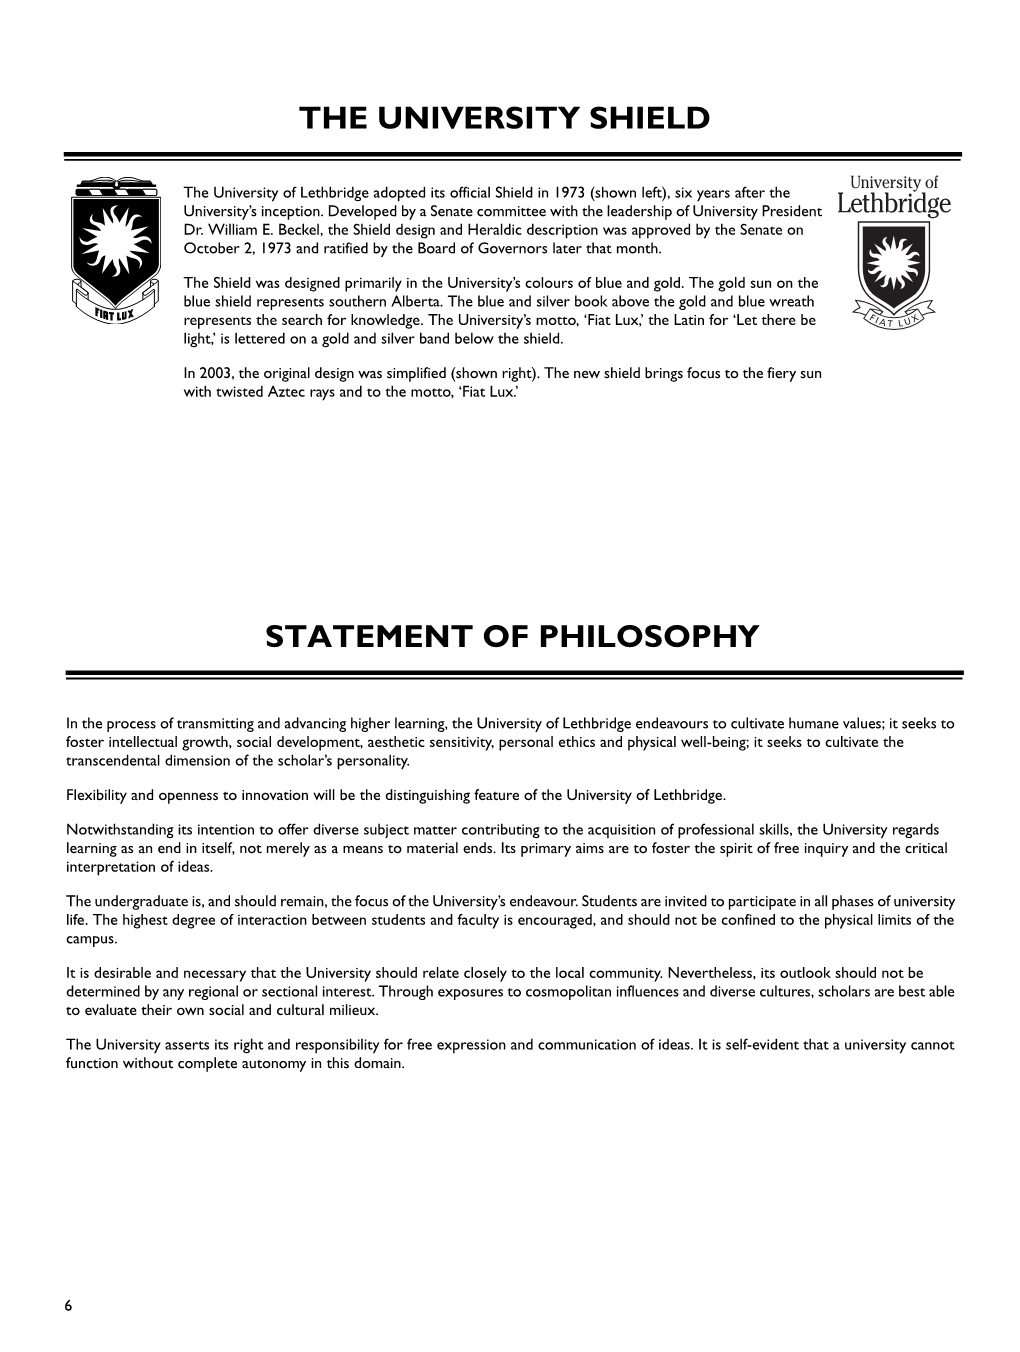 Statement of Philosophy the University Shield